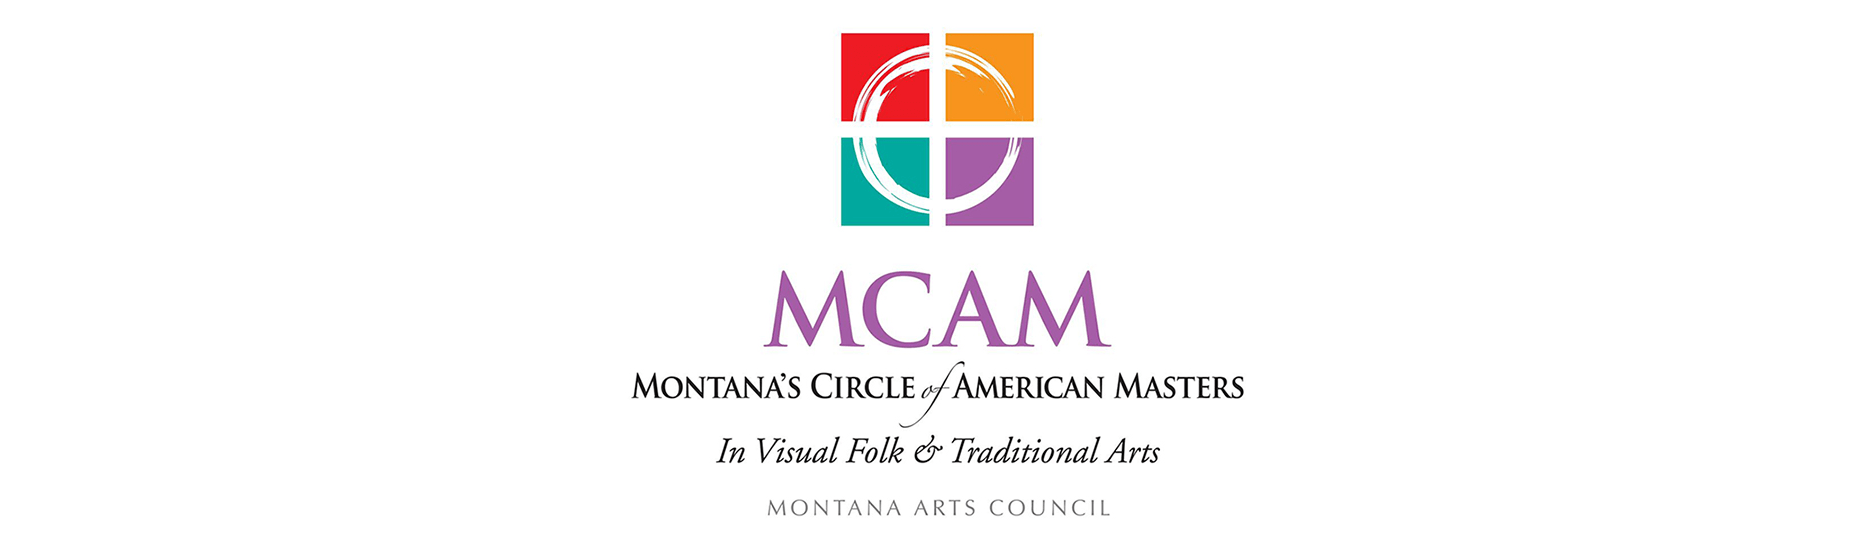 Circle Montana Logo - art.mt.gov > Grants, Awards & Public Art > Montana's Circle